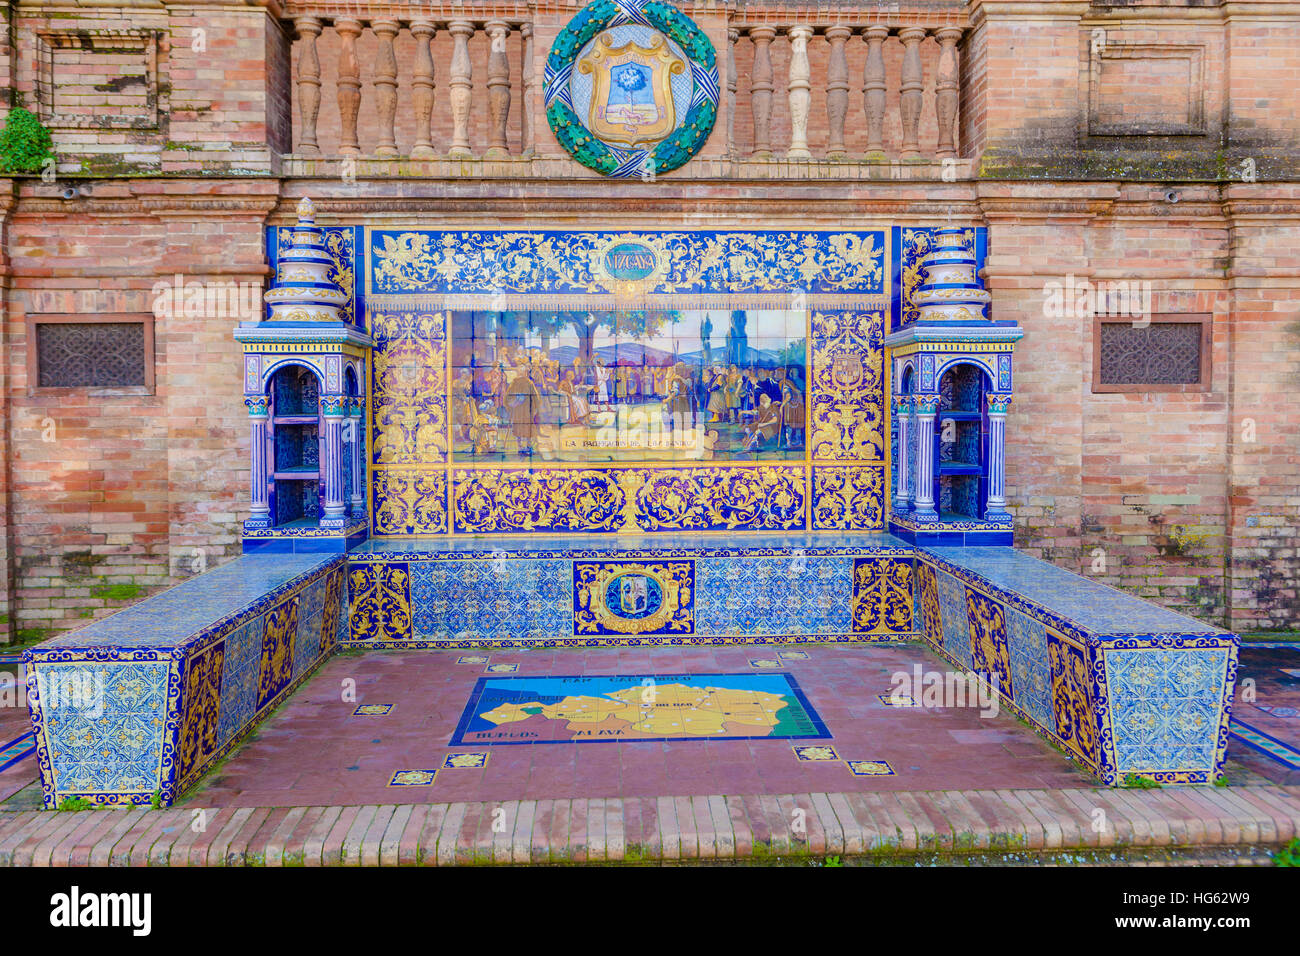 Glazed tiles bench of spanish province of Vizcaya at Plaza de Espana, Seville, Spain Stock Photo